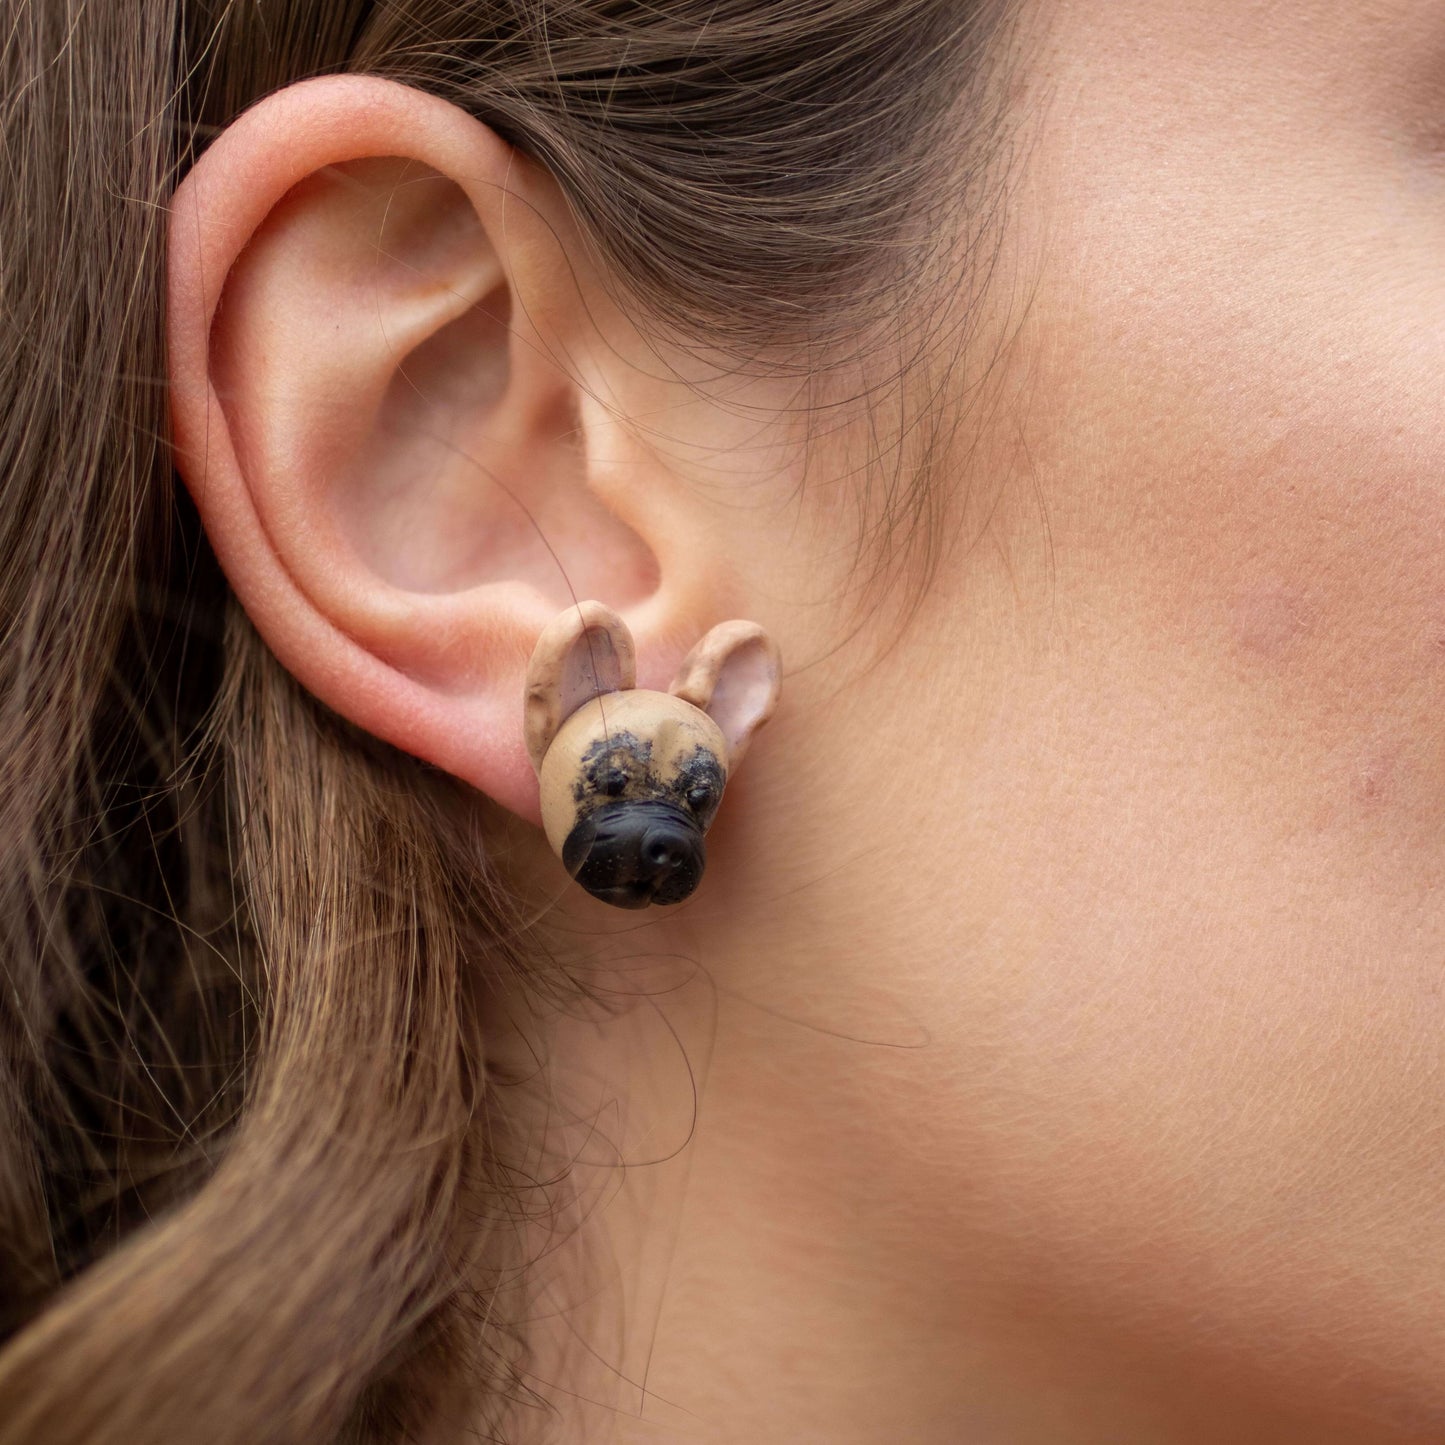 Handmade polymer clay french bulldog stud earrings shown on model's ear